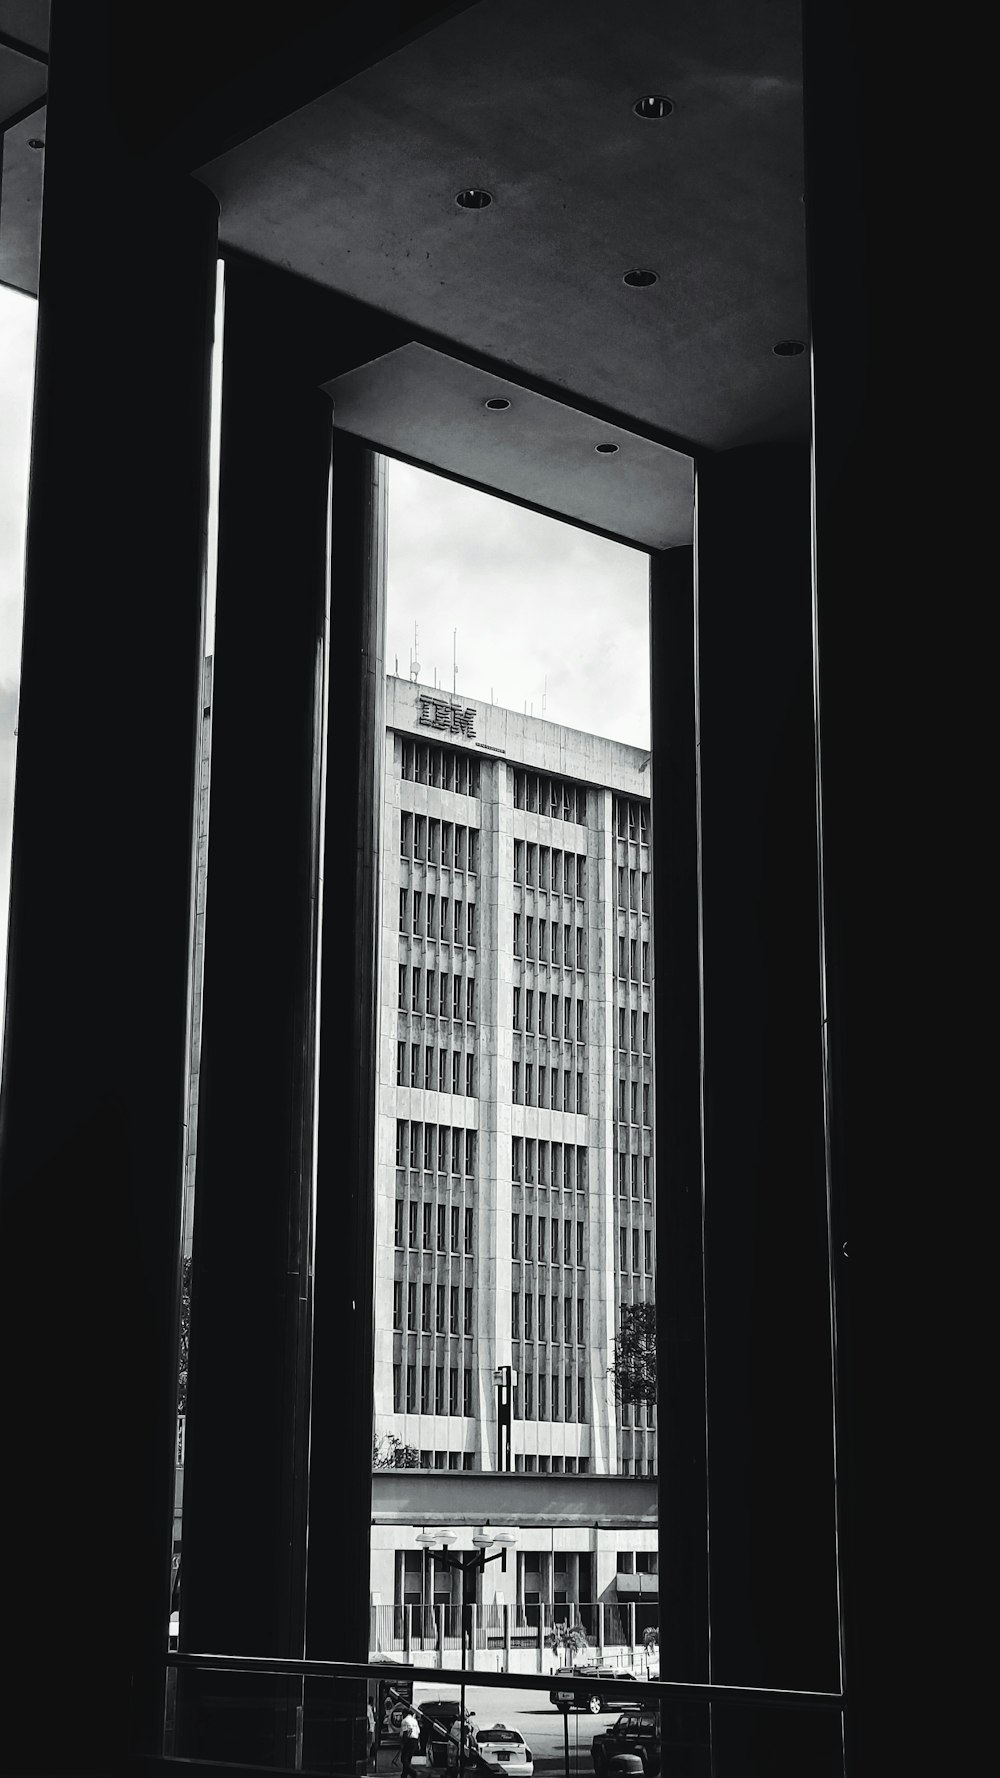 Fotografía en escala de grises de edificios